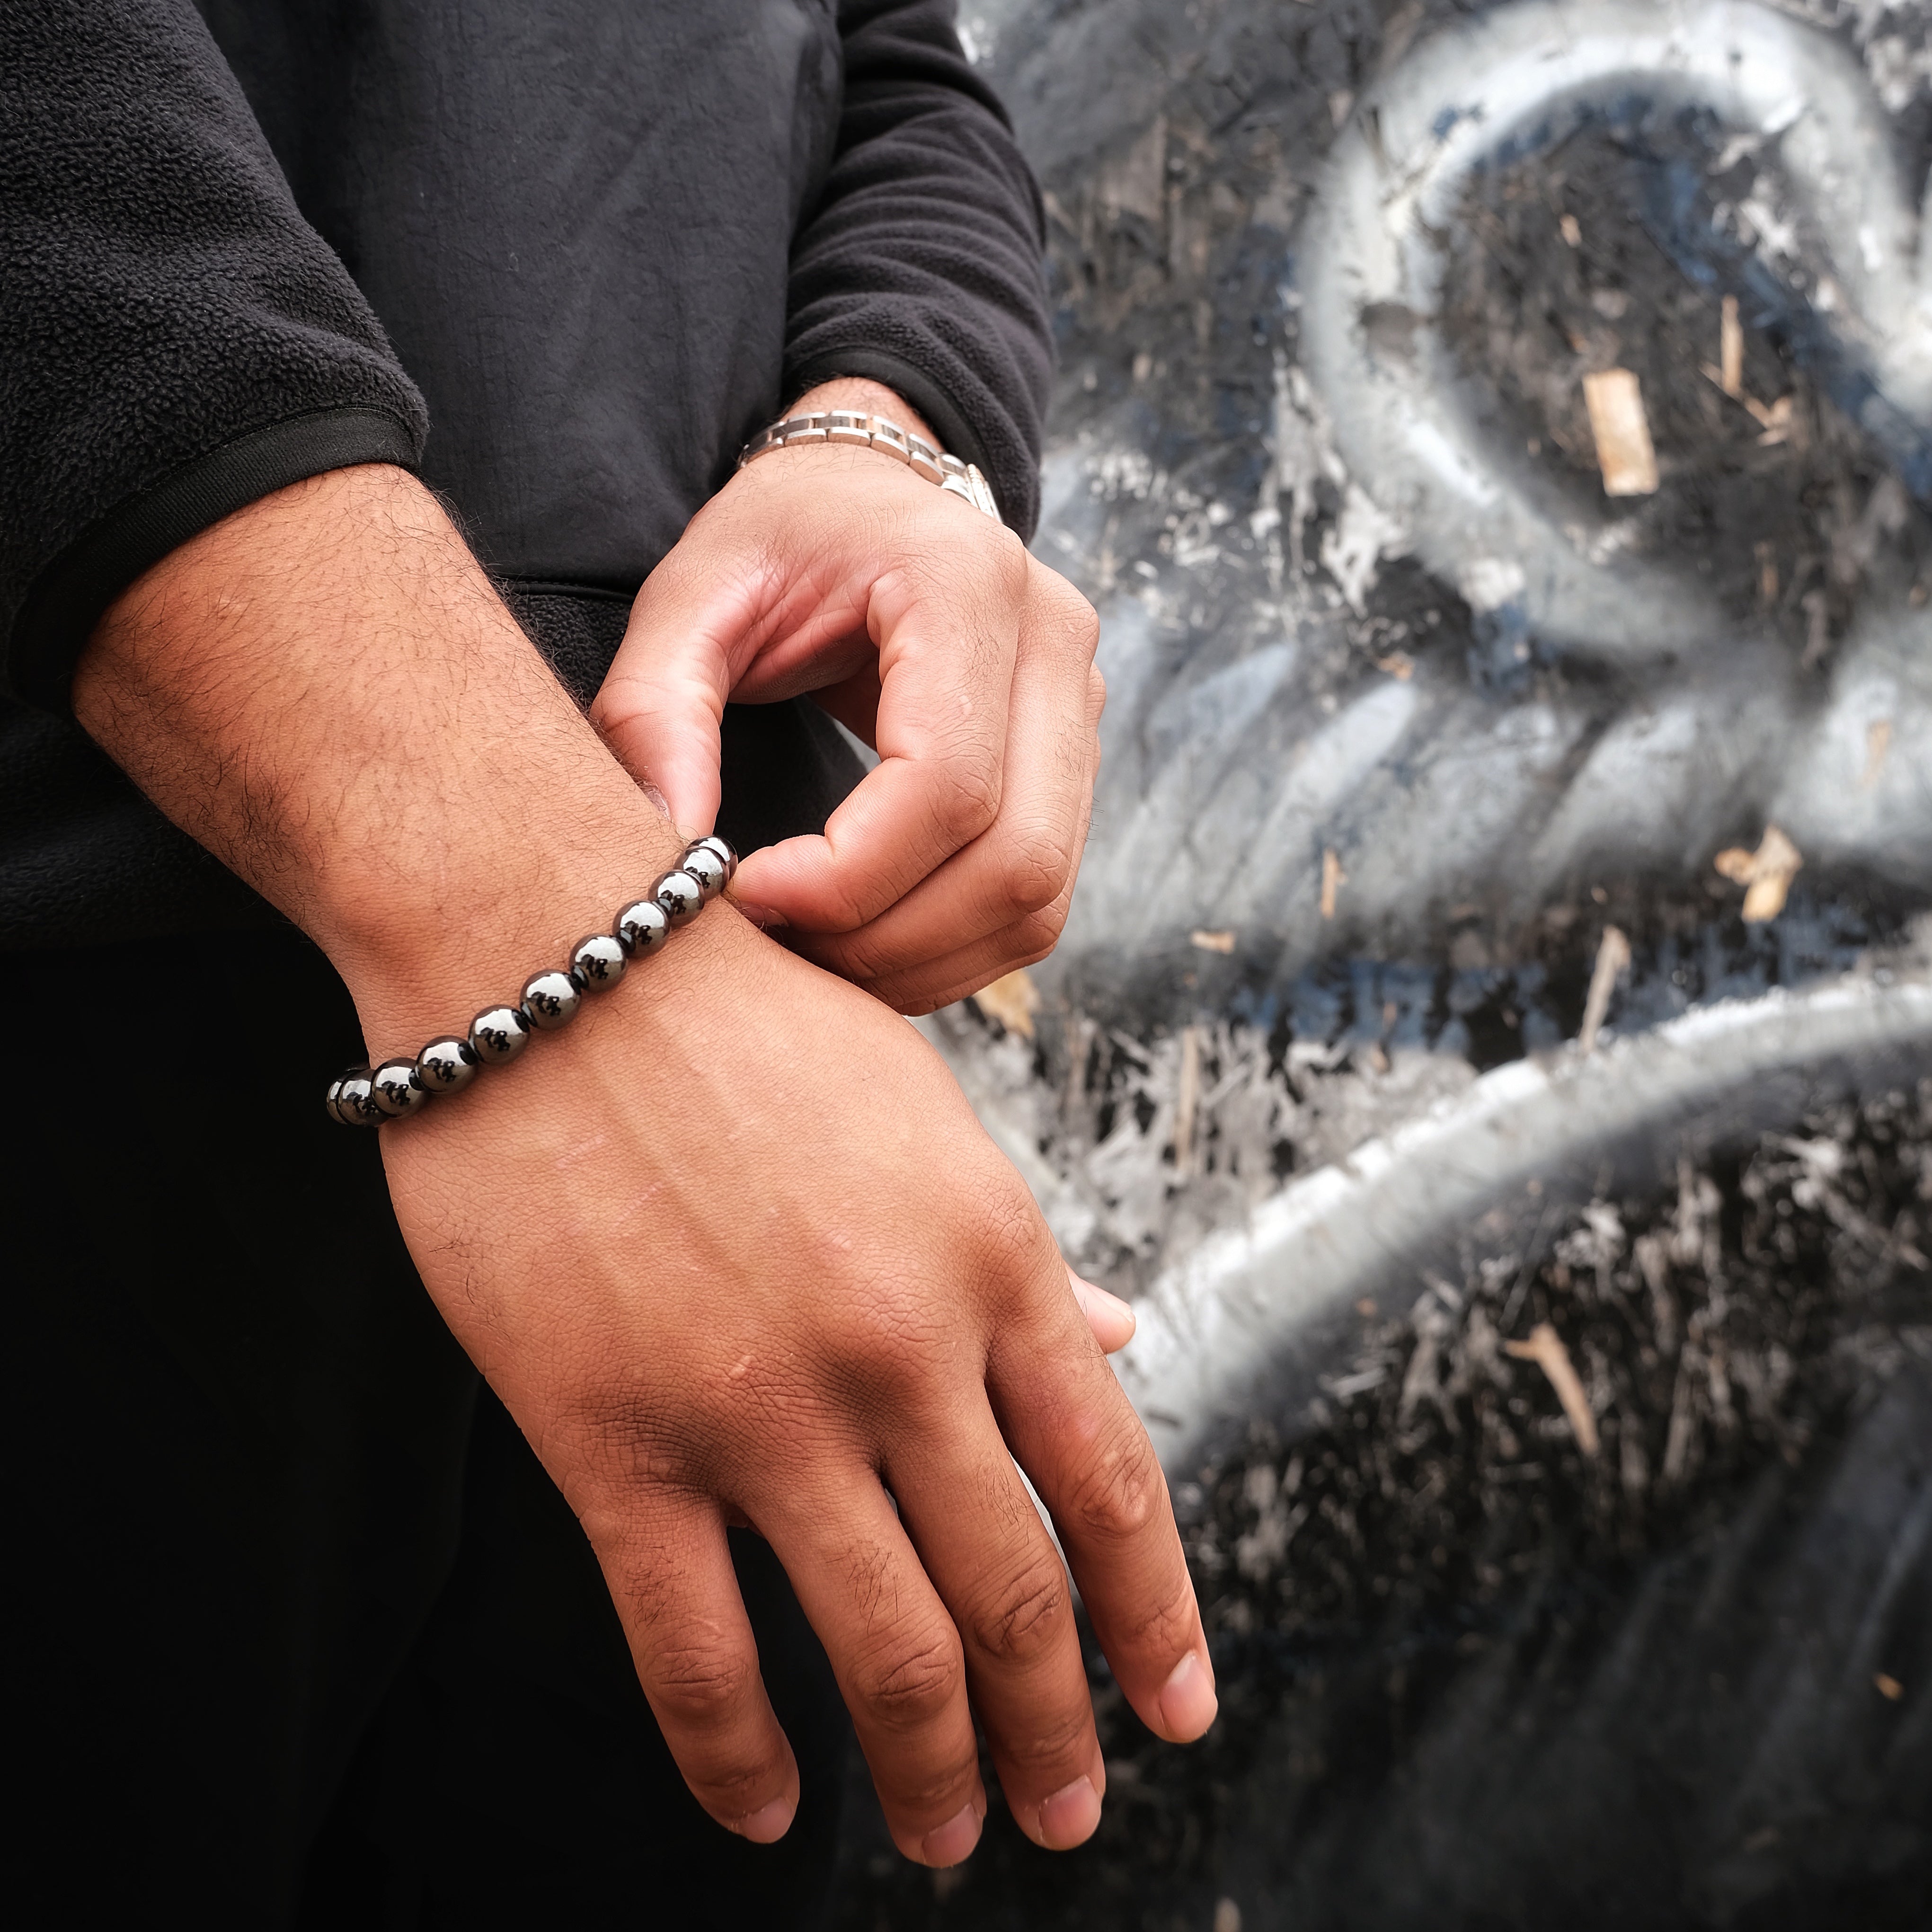 A model wearing a hematite gemstone bracelet in 10mm beads with steel accessory